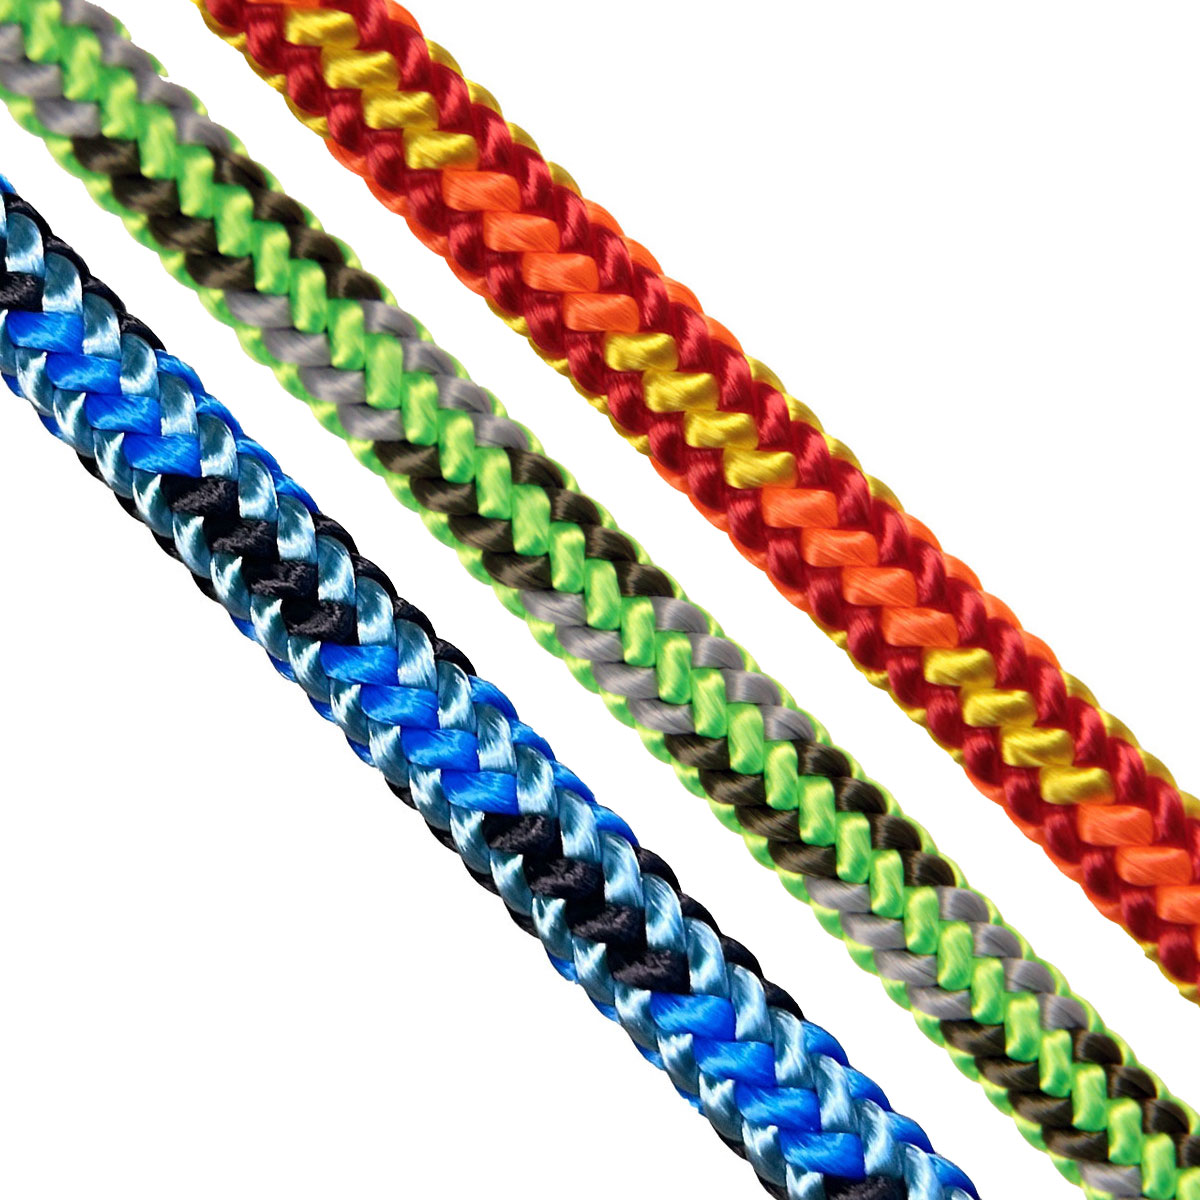 arborfreak samson 16-strand rope